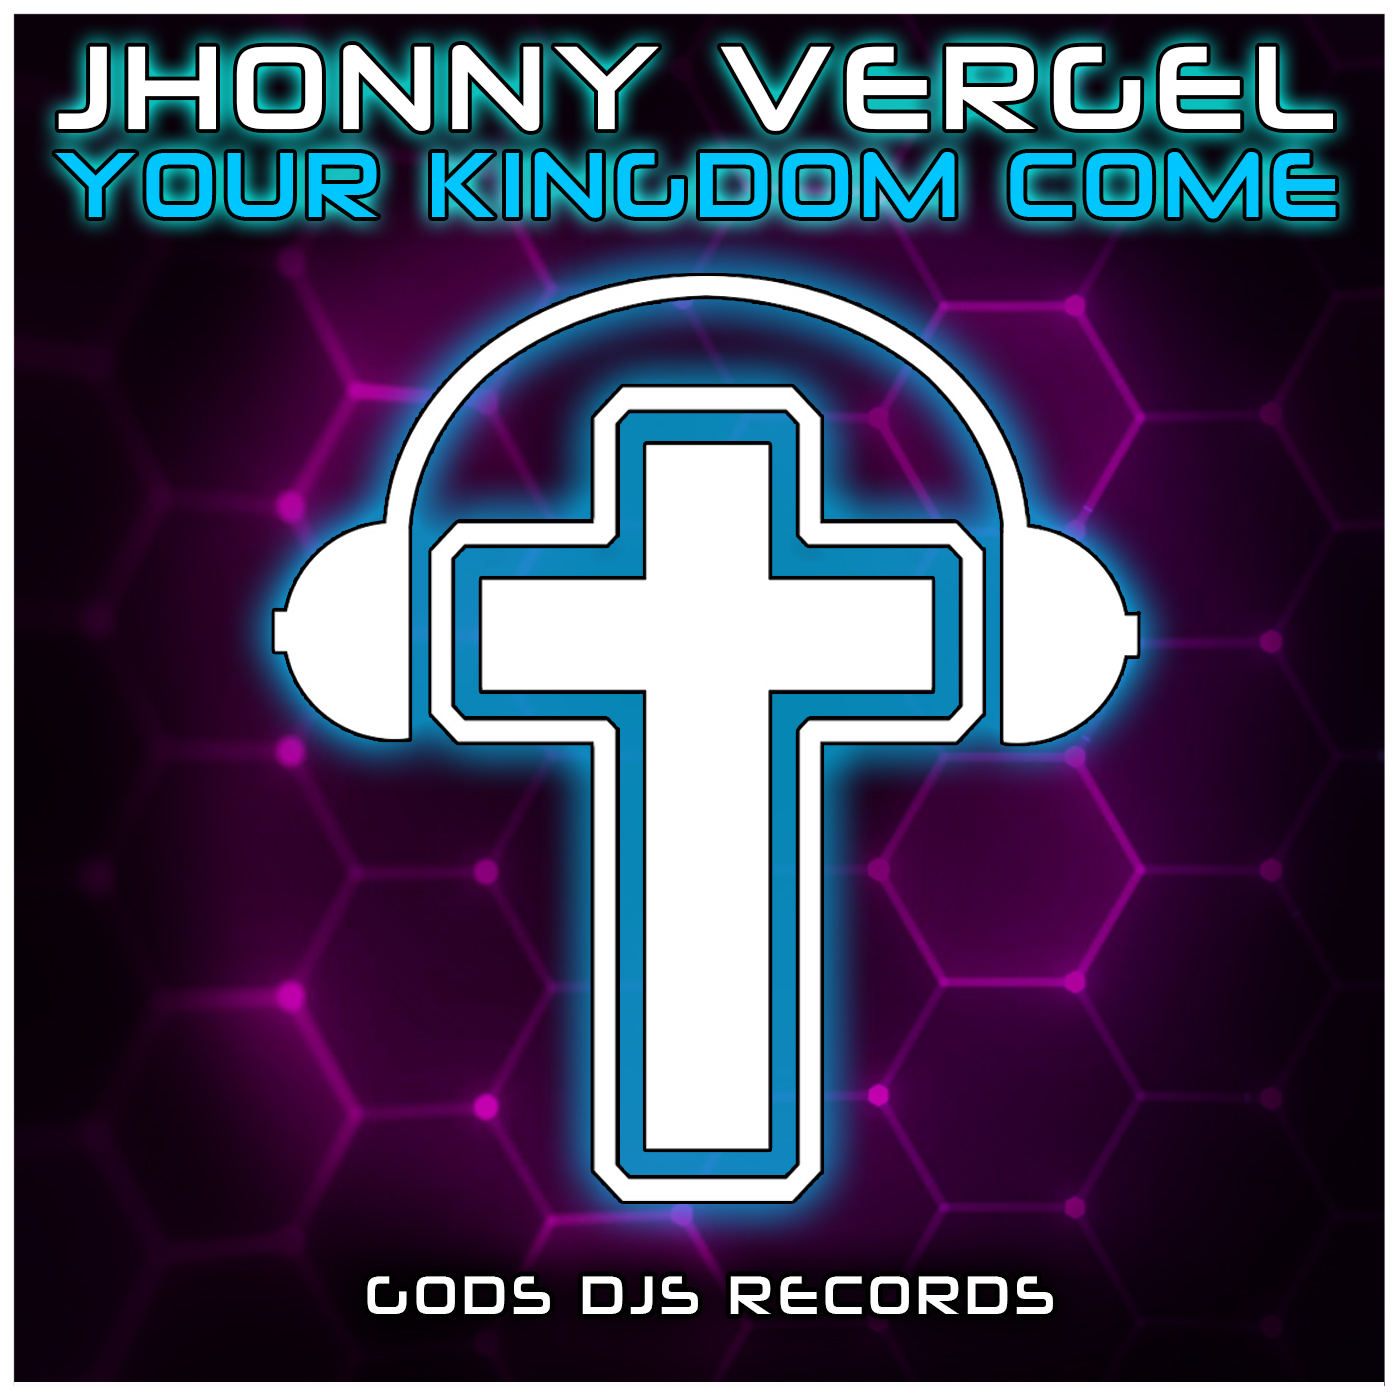 Jhonny Vergel – Your Kingdom Come